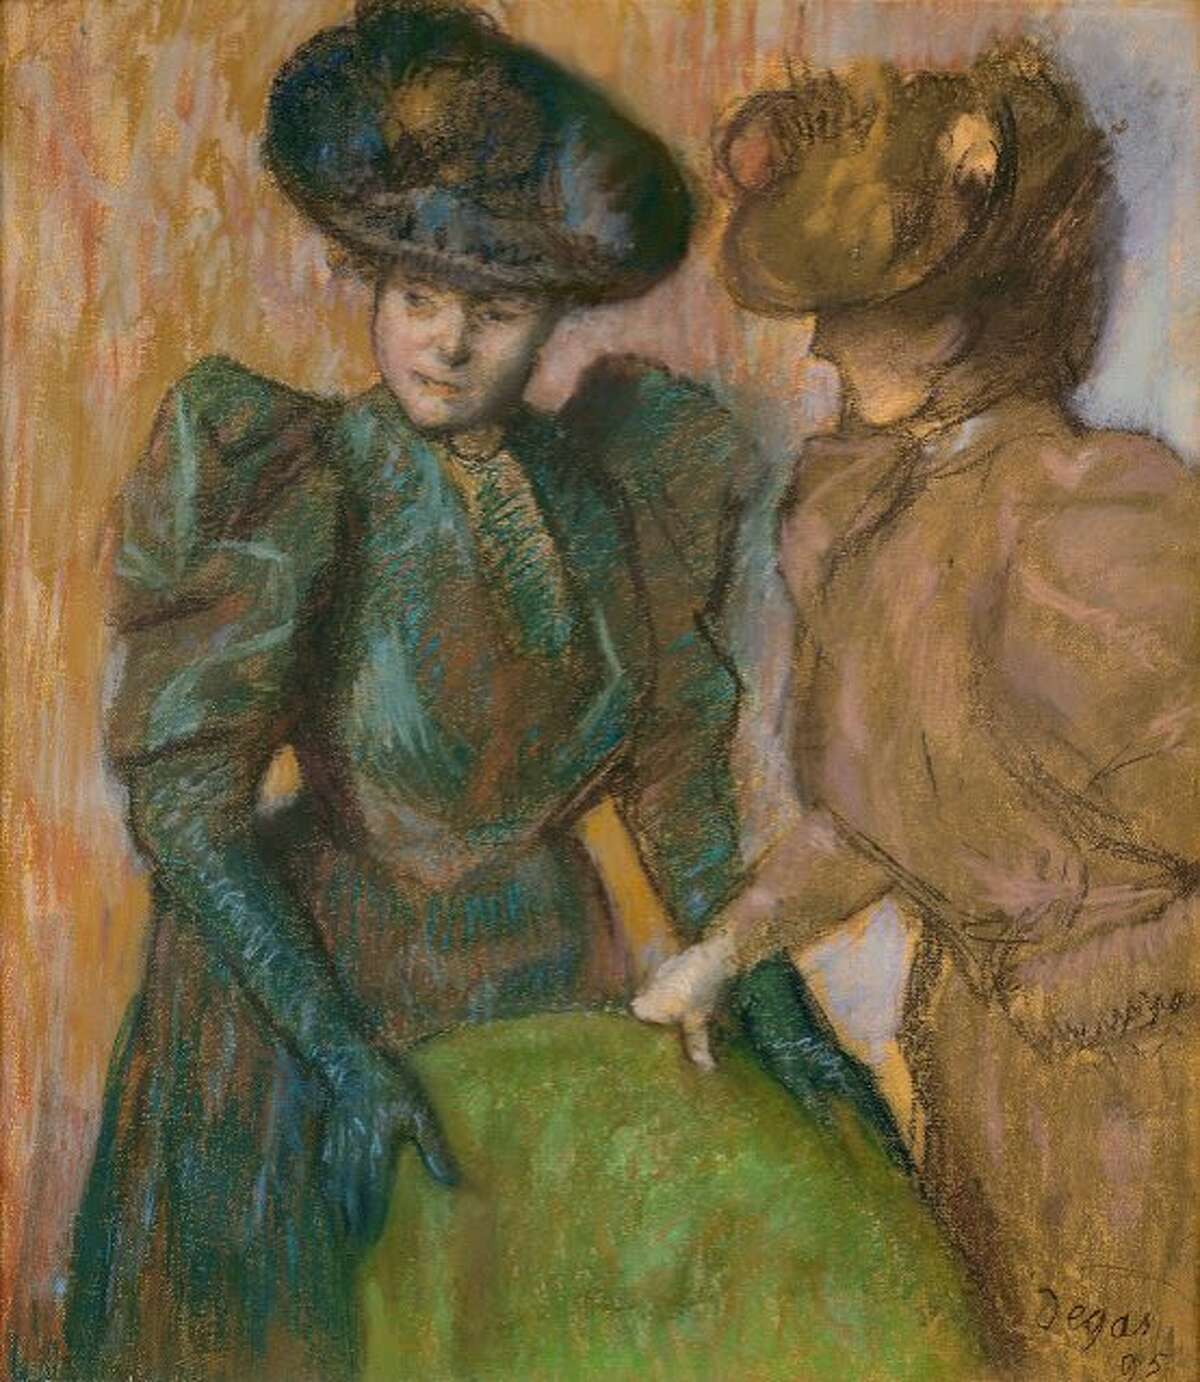 Edgar Degas, "The Conversation," 1895. Pastel on paper.